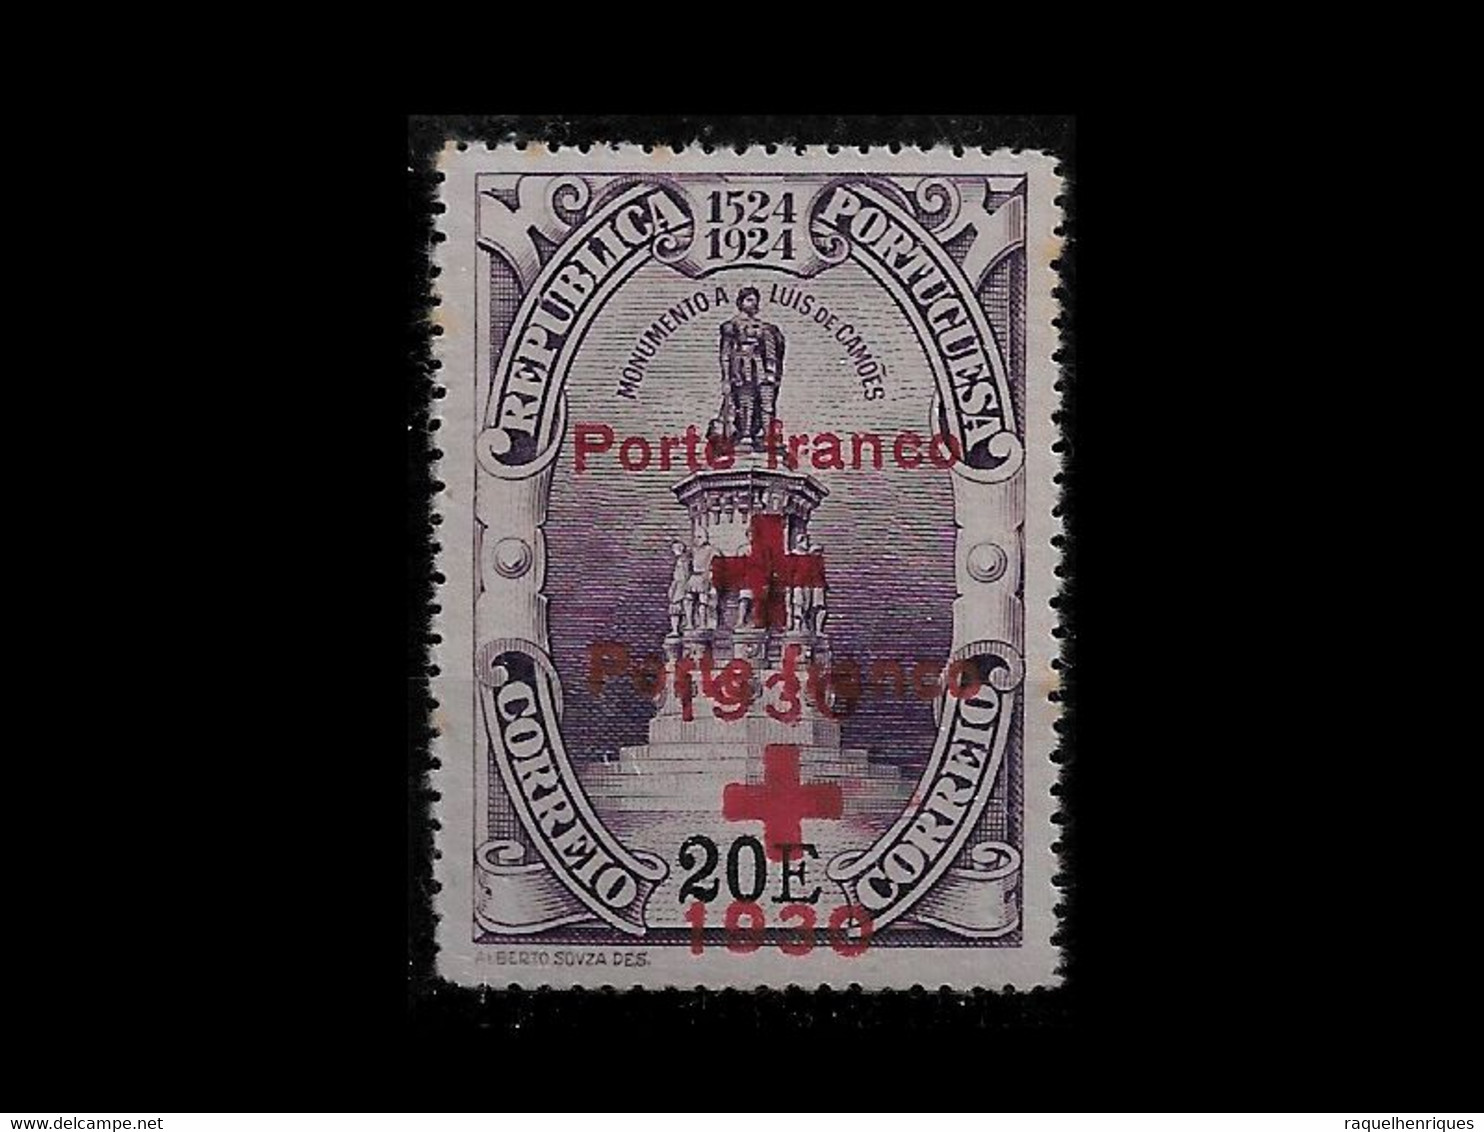 PORTUGAL PORTE FRANCO - 1930 ERROR DOUBLE SURCHARGED MNH (PLB#01-109) - Nuovi